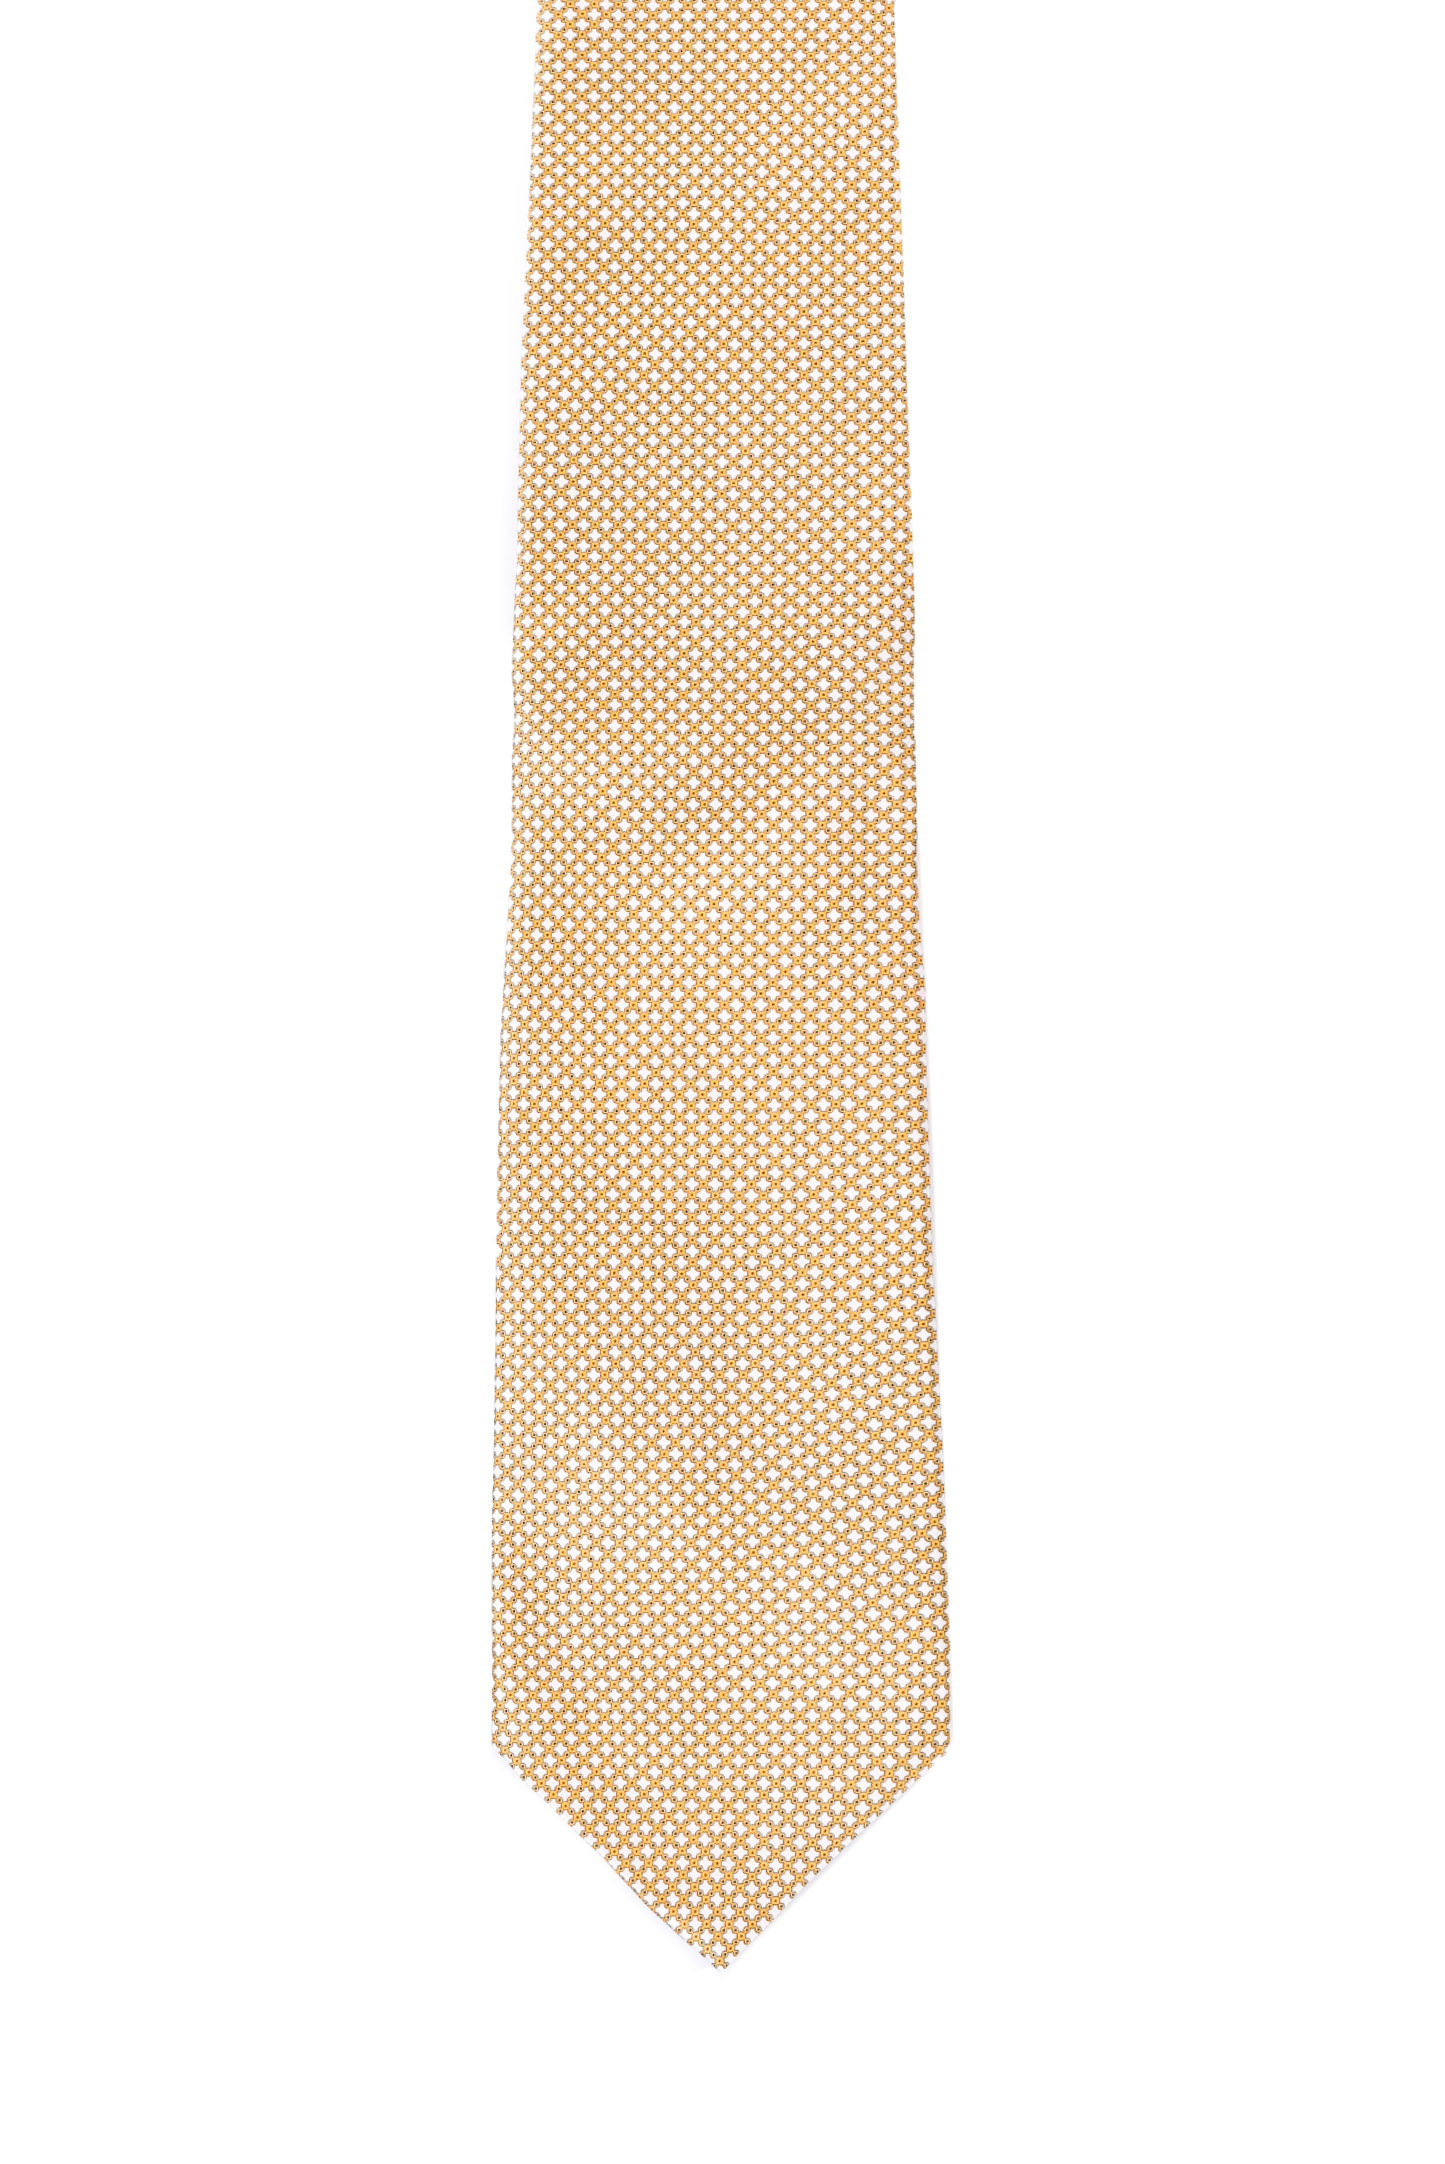 Галстук и платок STEFANO RICCI DH 31033 012, цвет: Желтый, Мужской